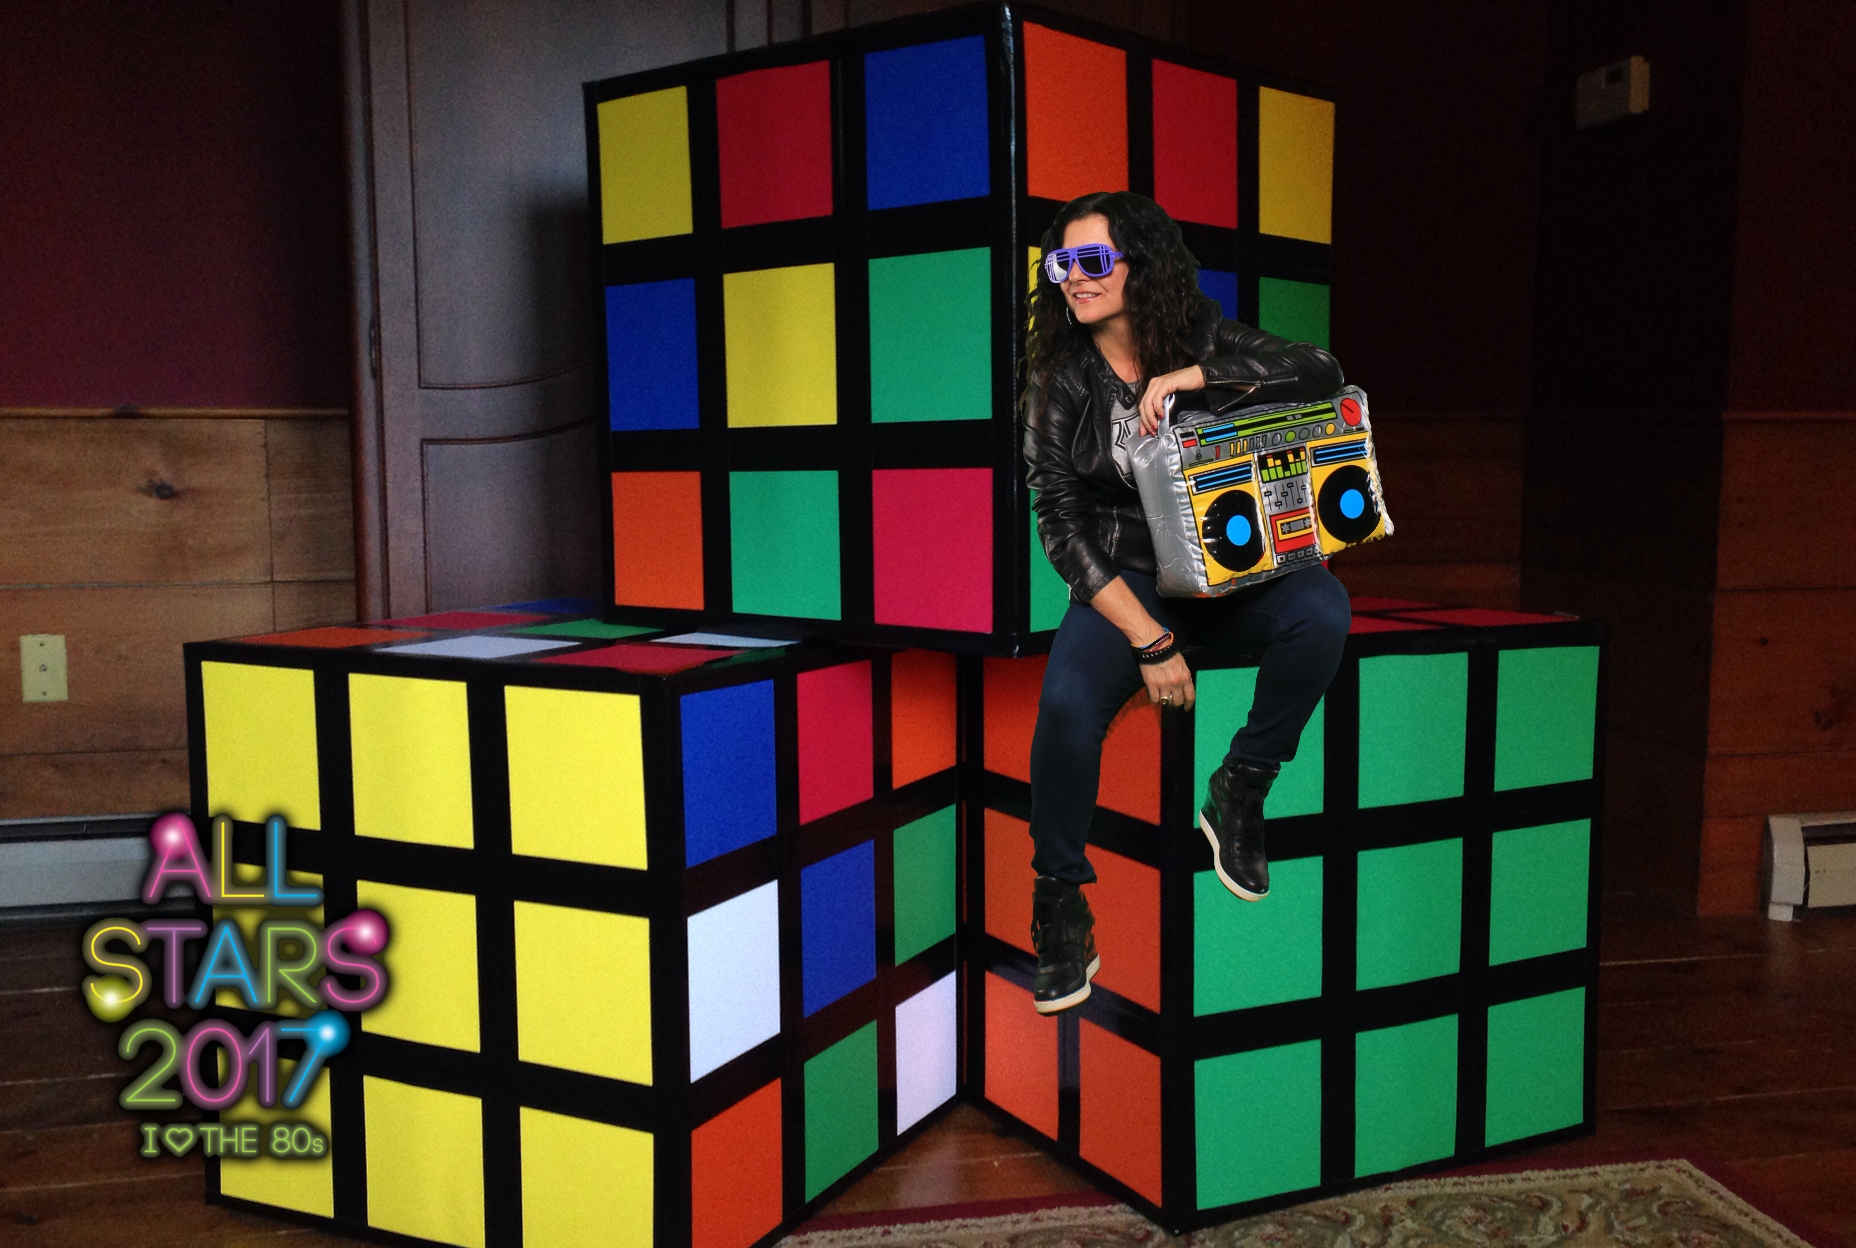 80's theme - Lady sitting on a Rubik's cube.